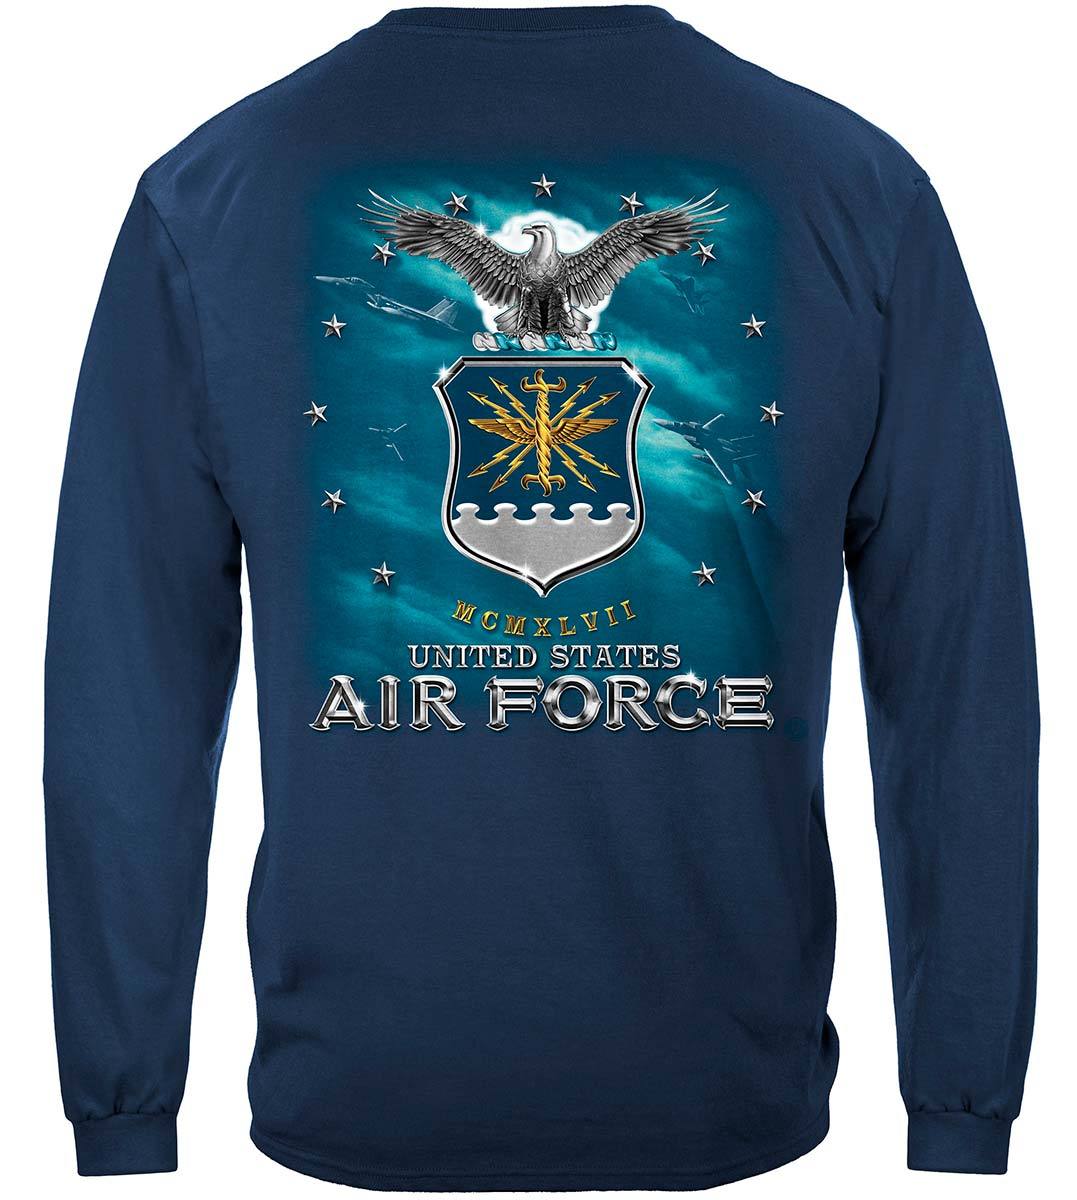 Air Force USAF Missile Premium T-Shirt